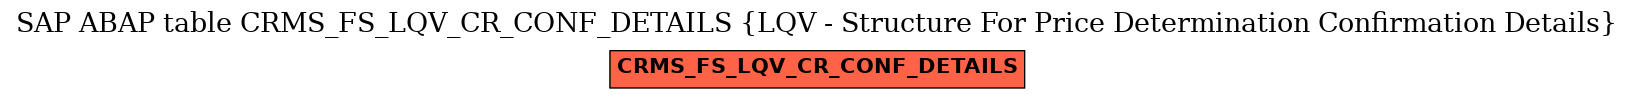 E-R Diagram for table CRMS_FS_LQV_CR_CONF_DETAILS (LQV - Structure For Price Determination Confirmation Details)